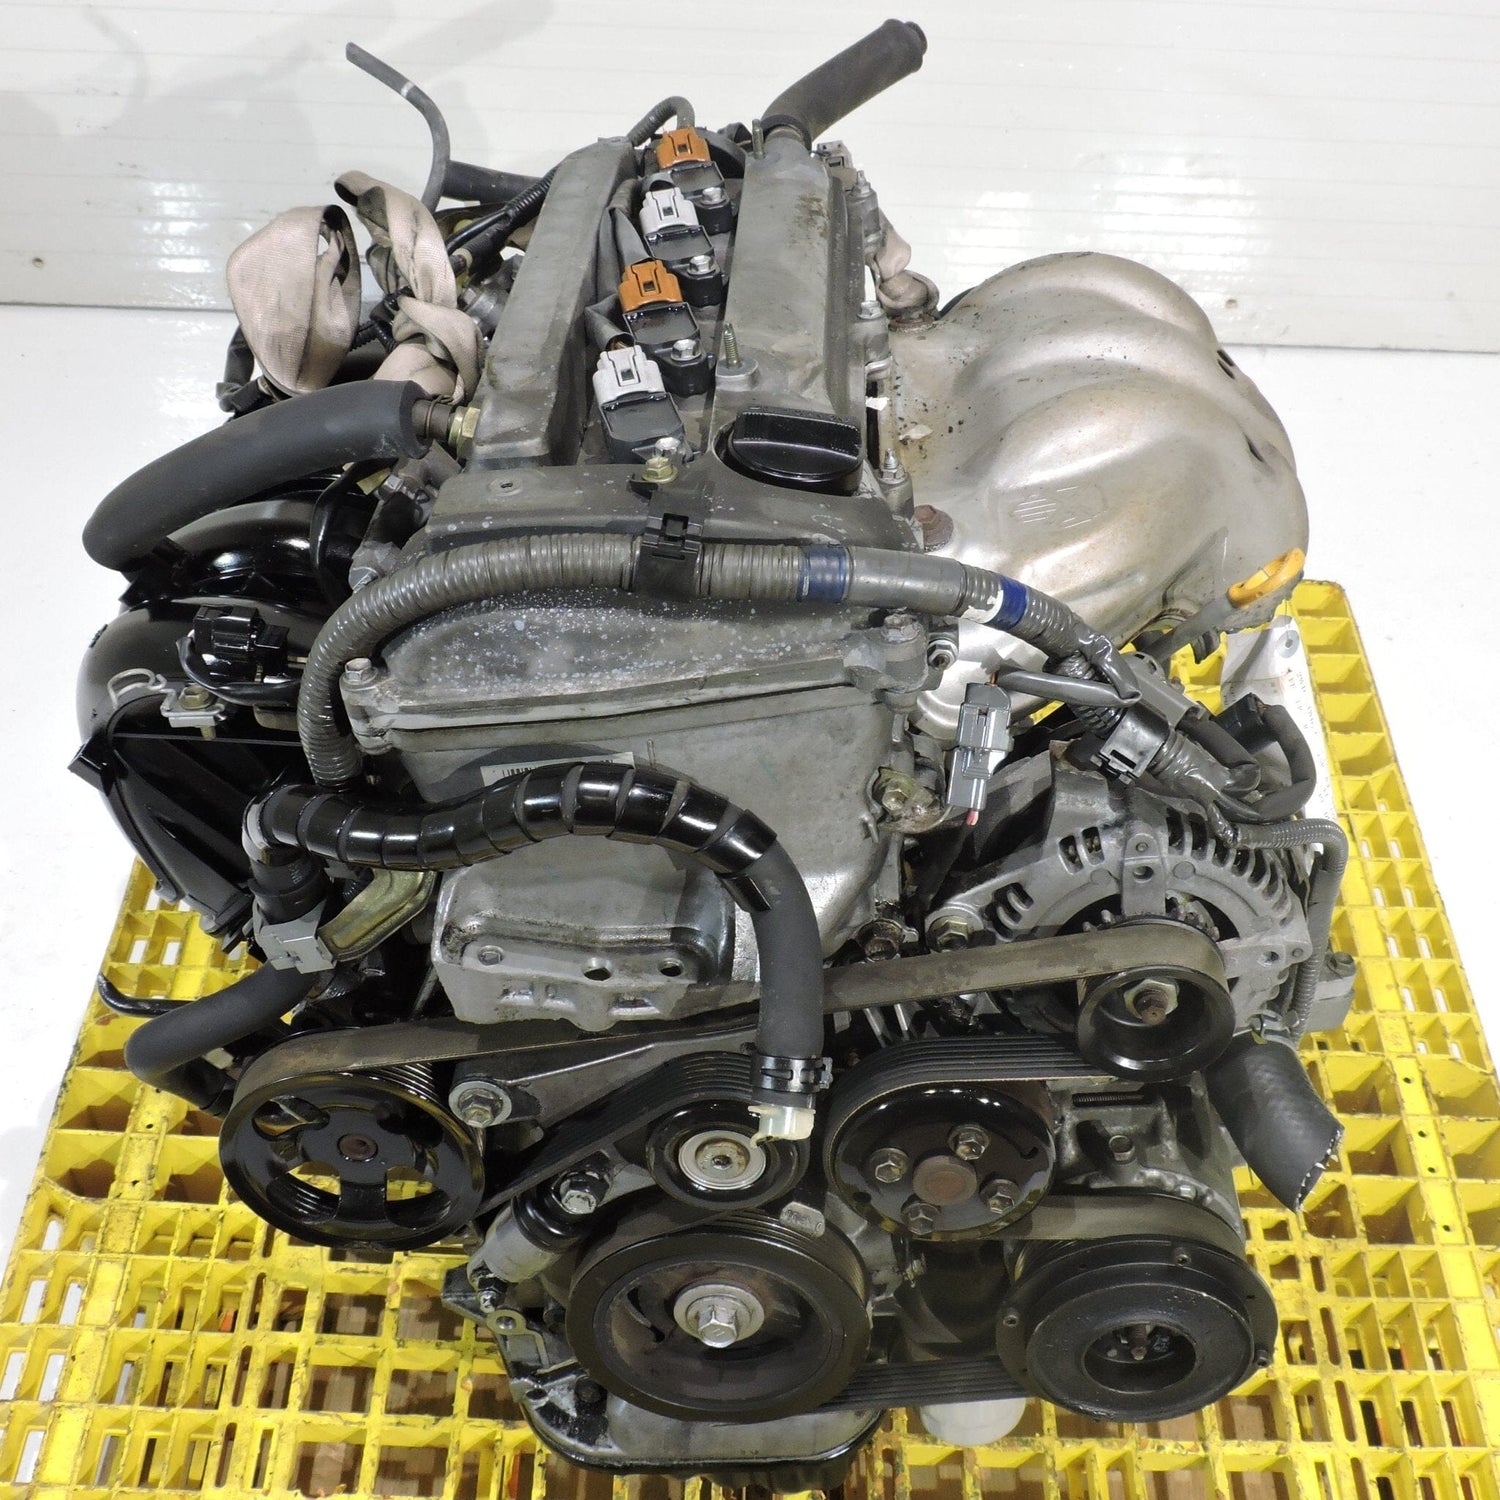 Toyota Solara 2002-2008 2.4L JDM Engine Motor - 2AZ-FE 4-Cylinder